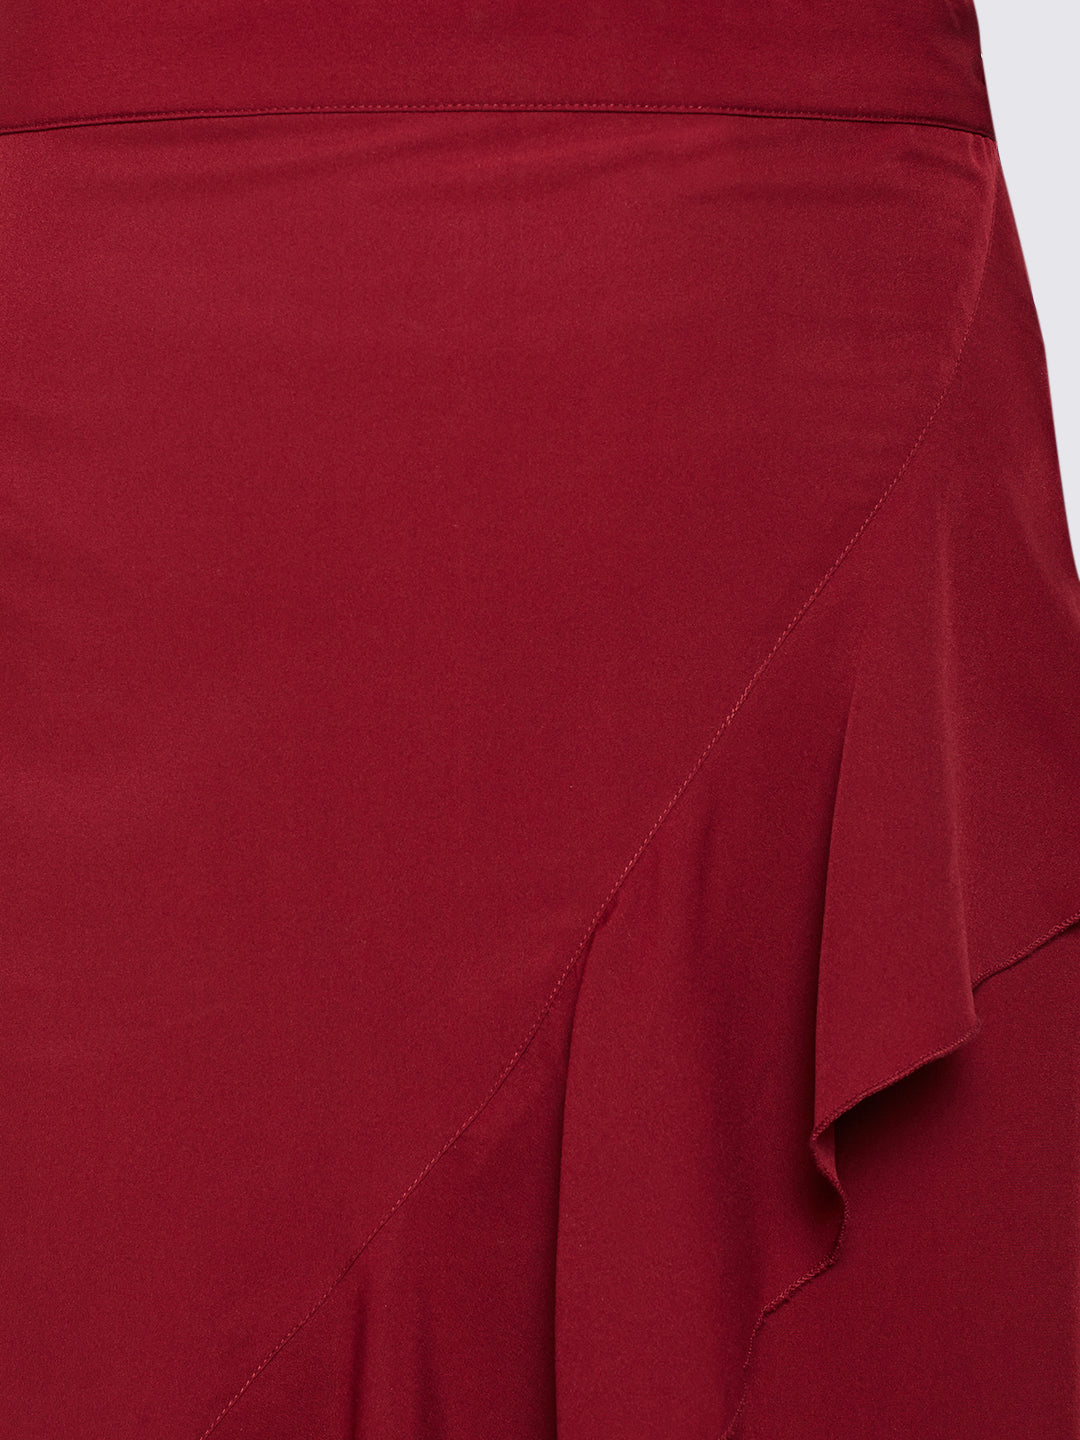 Berrylush Women Solid Maroon Waist Tie-Up Ruffled High-Low Wrap Maxi Skirt